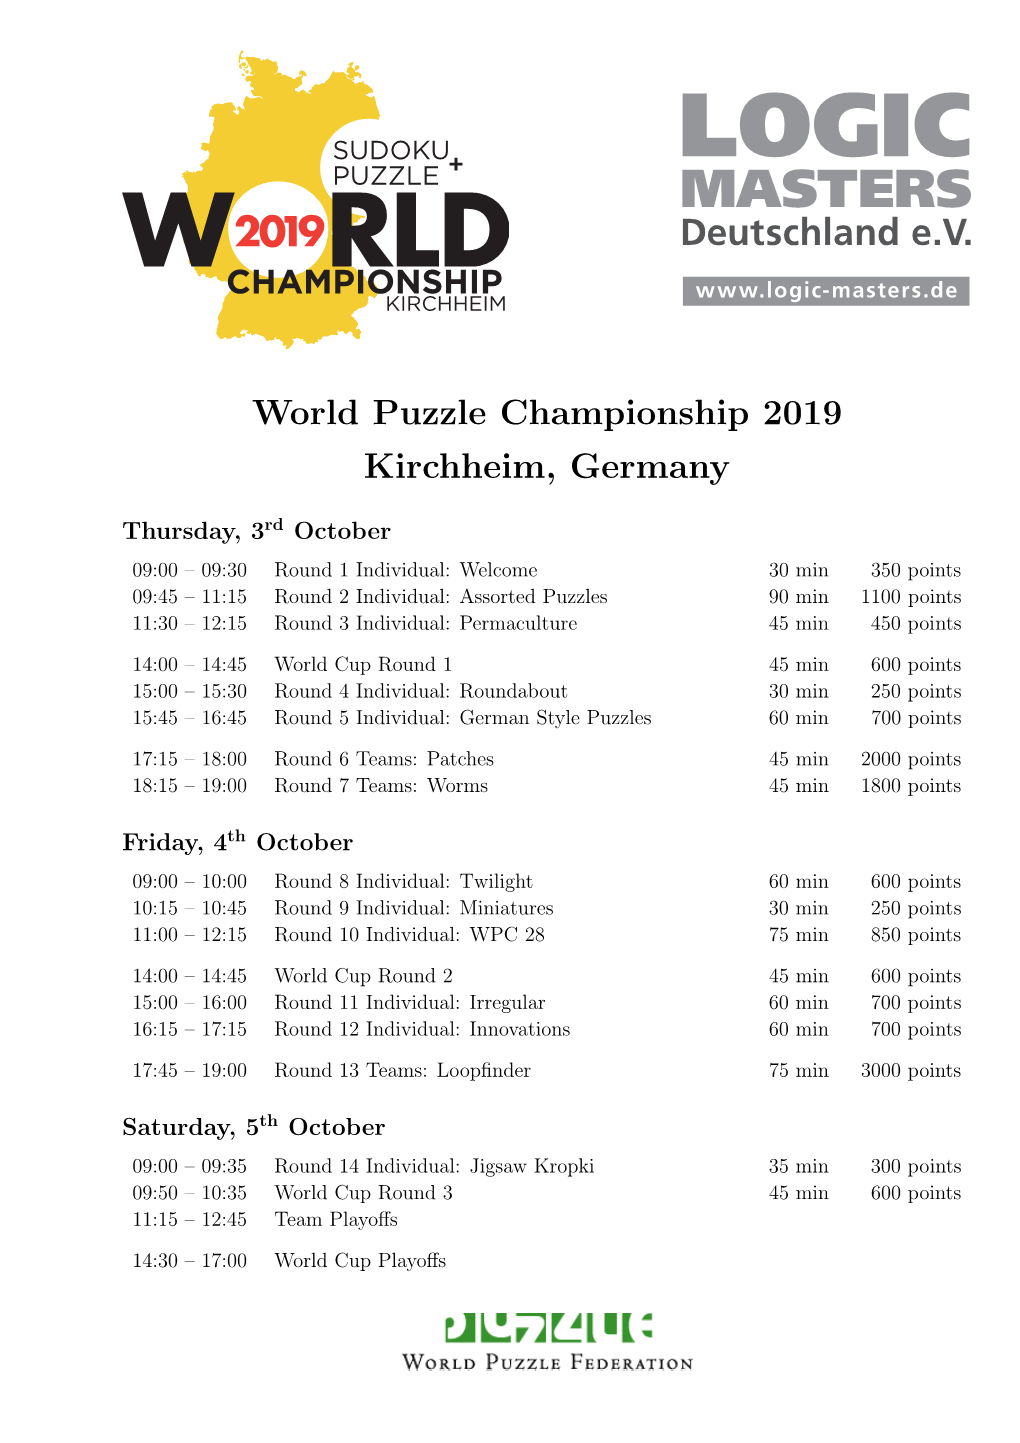 World Puzzle Championship 2019 Kirchheim, Germany